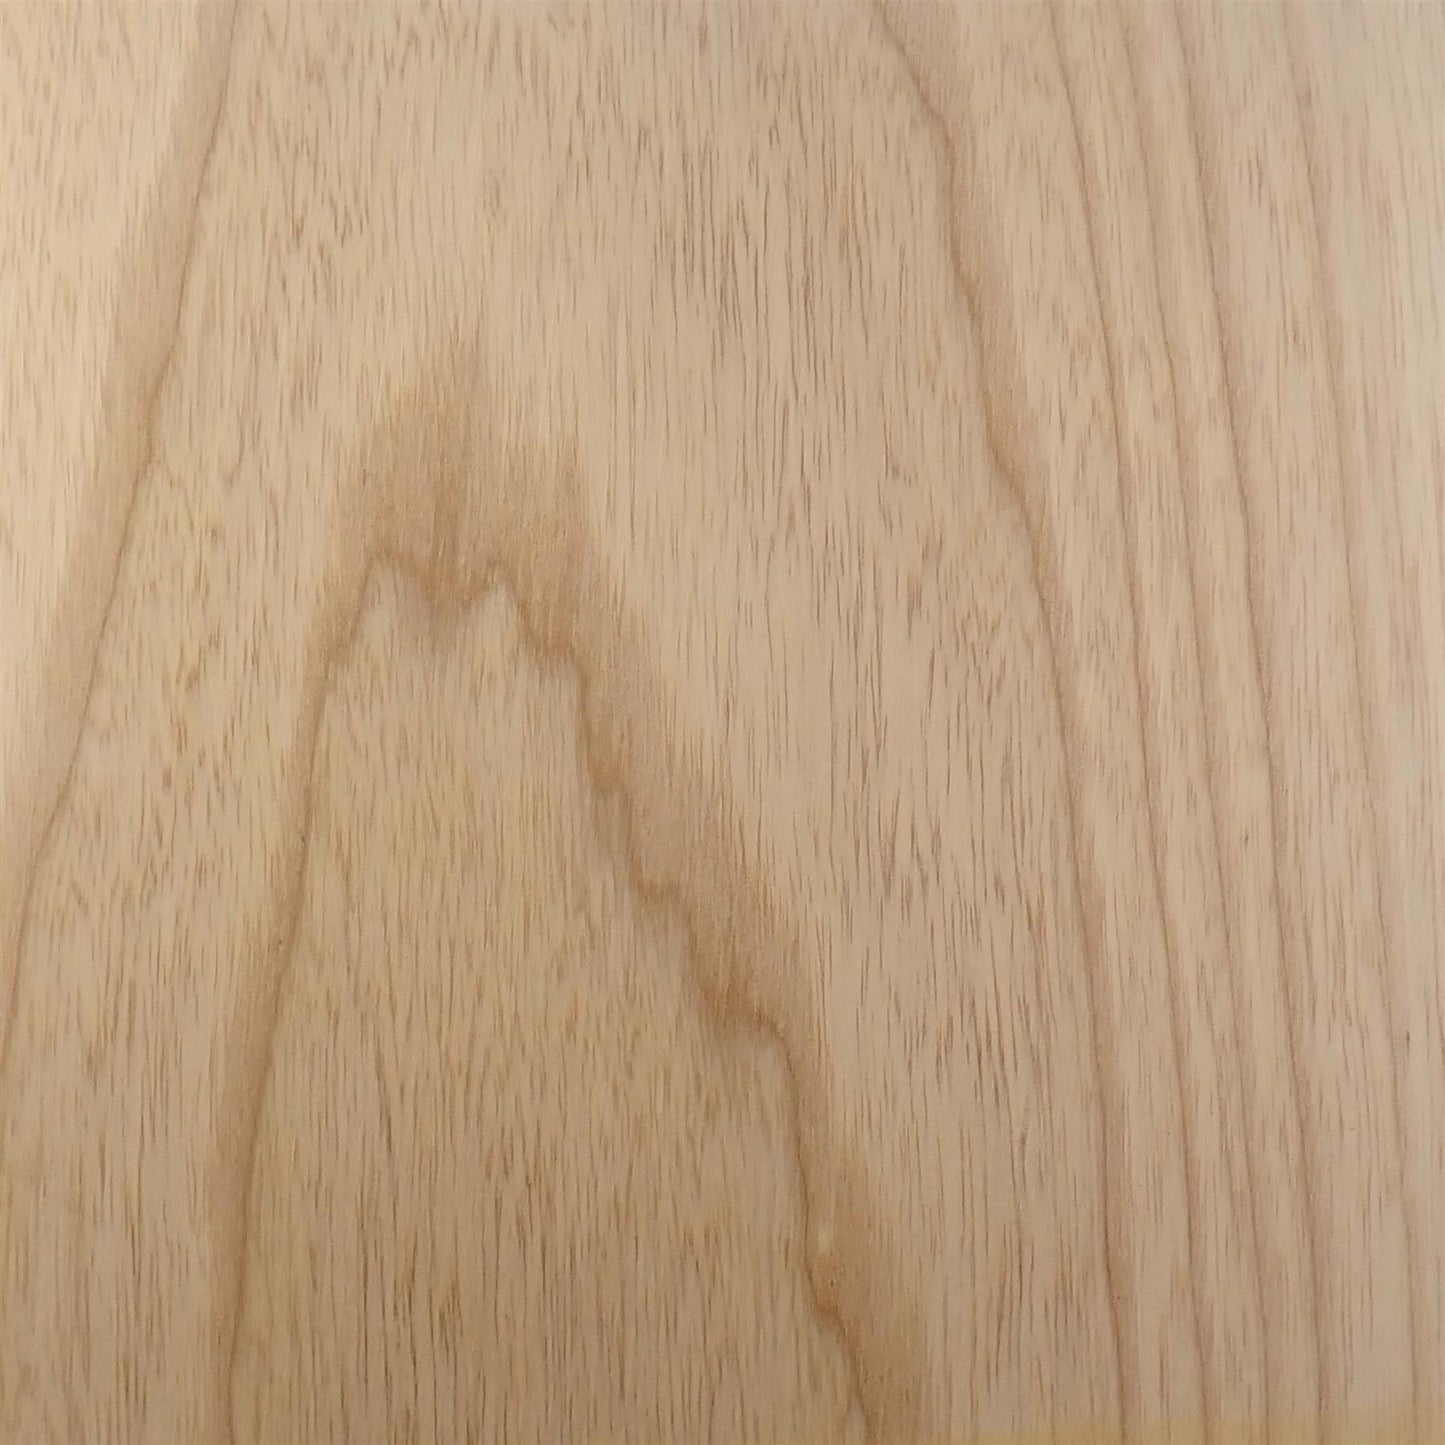 Luthitec Swamp Ash Wood Finish Sampler Board - 150x150x4mm (5.9x5.91x0.16")